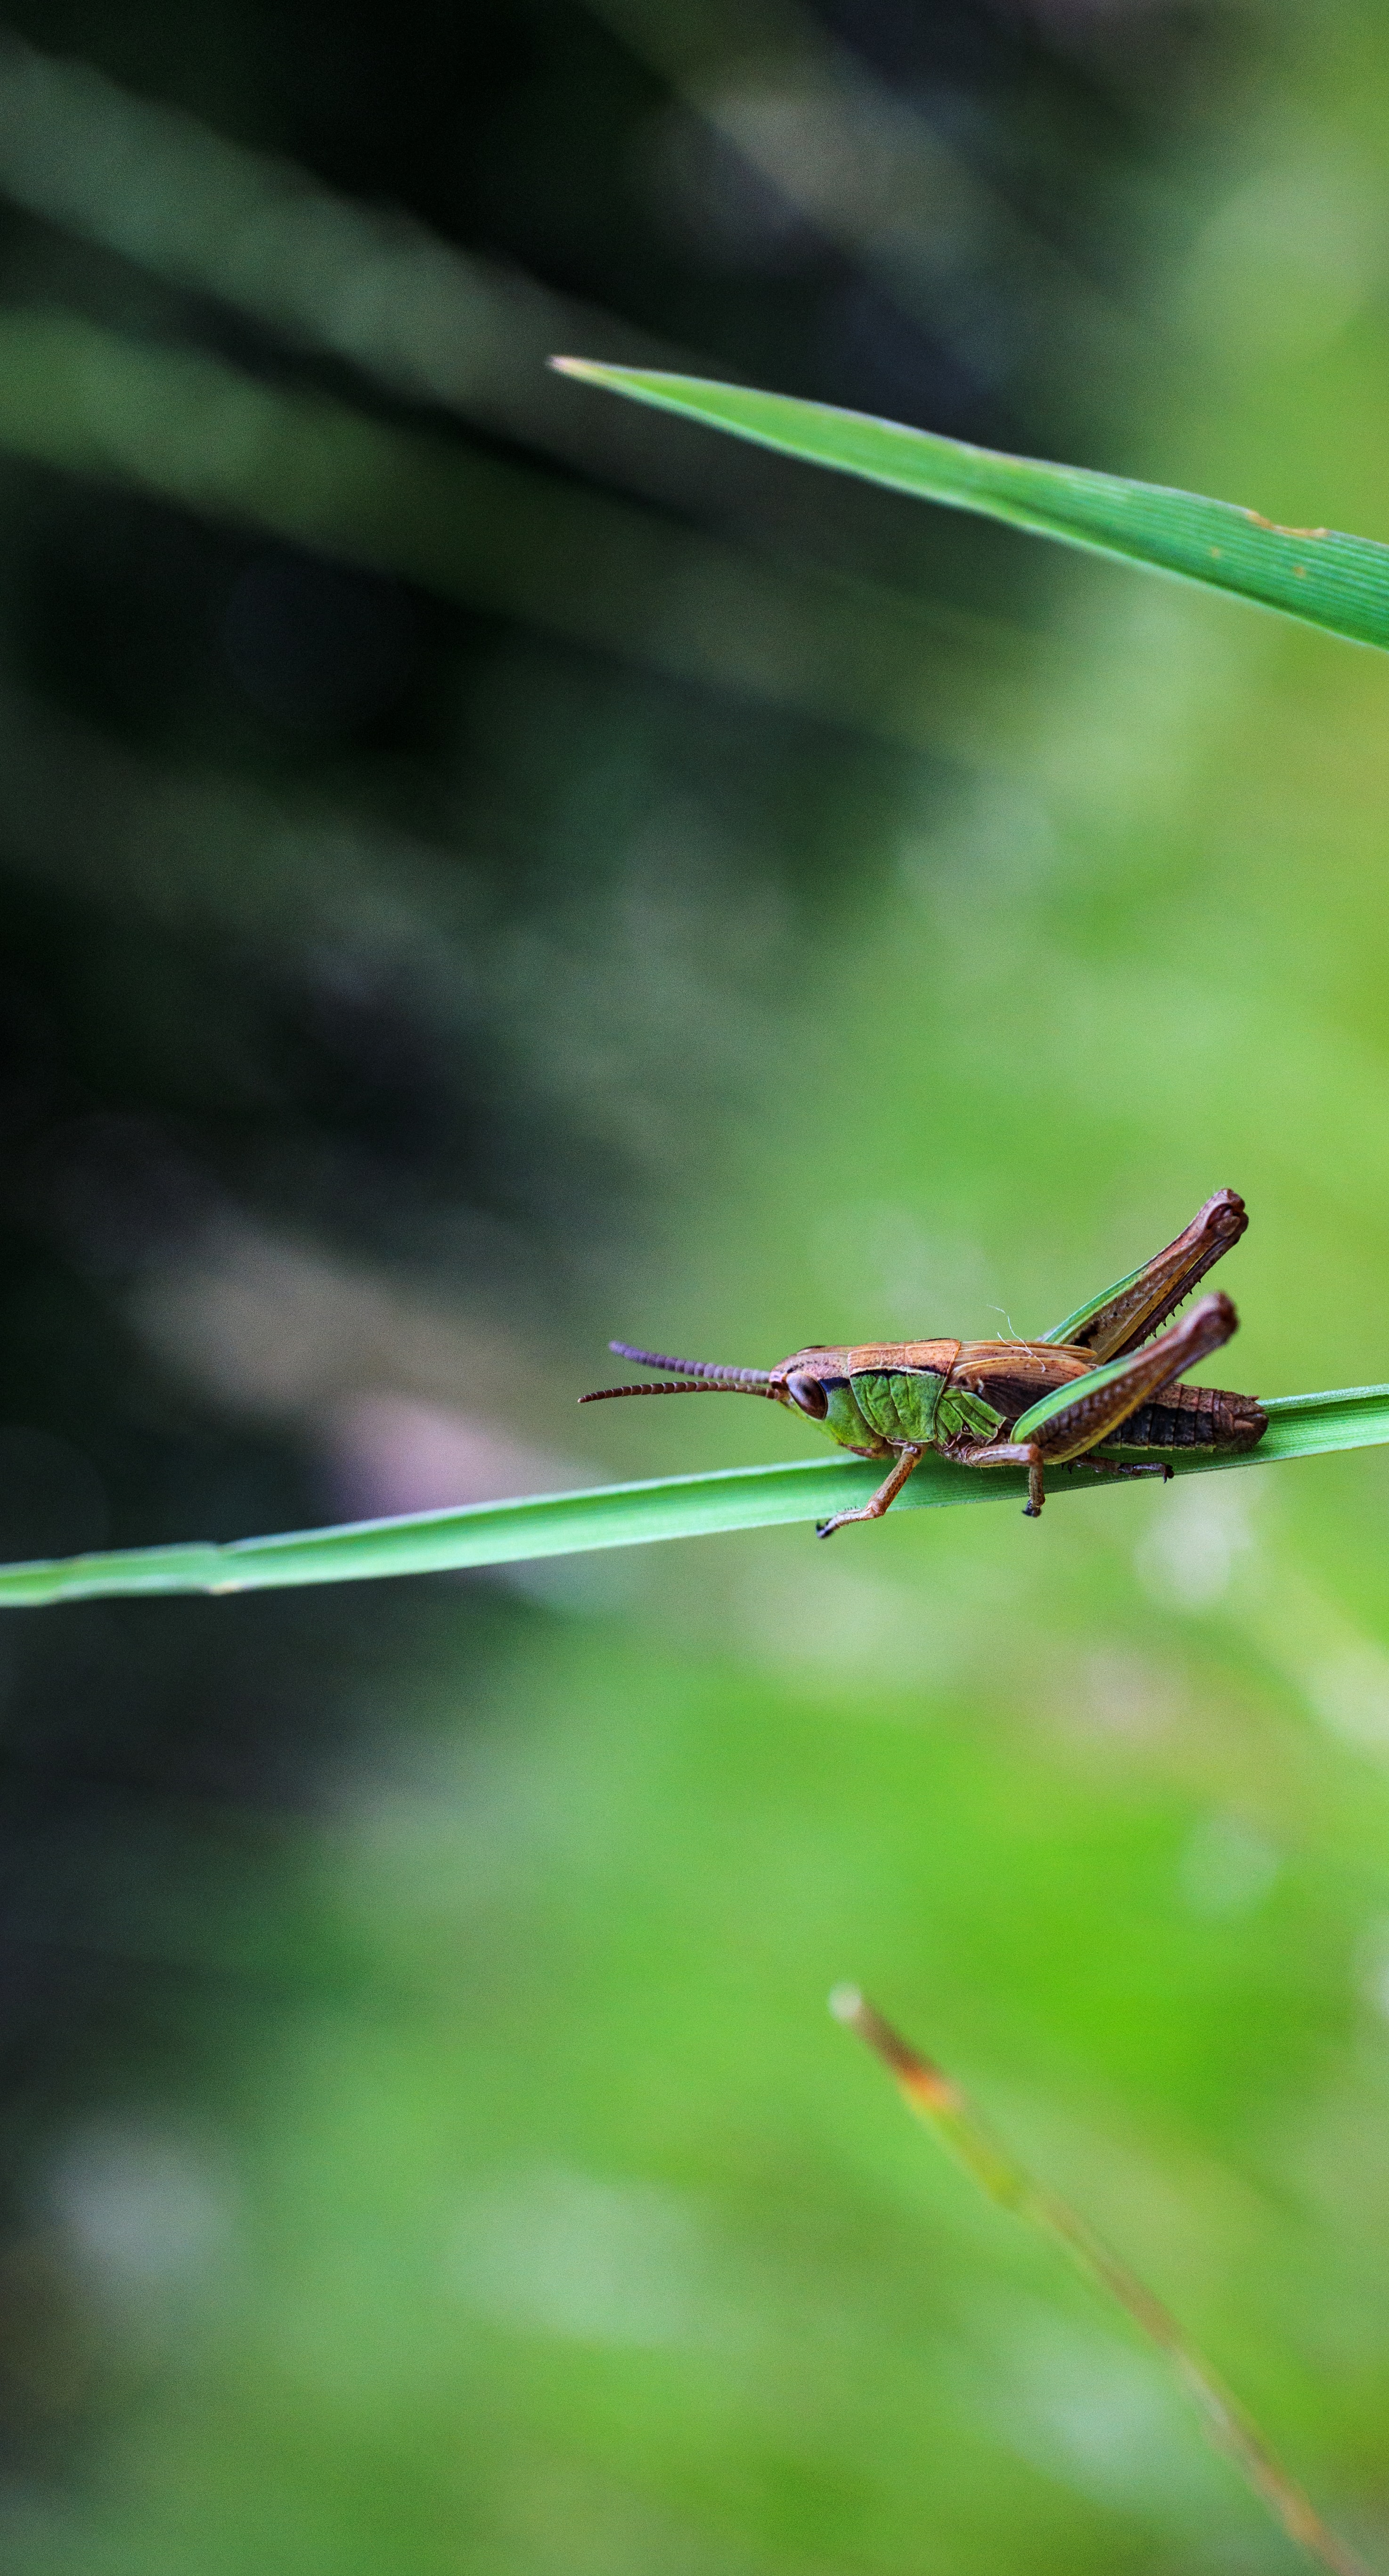 8k Grasshopper Images